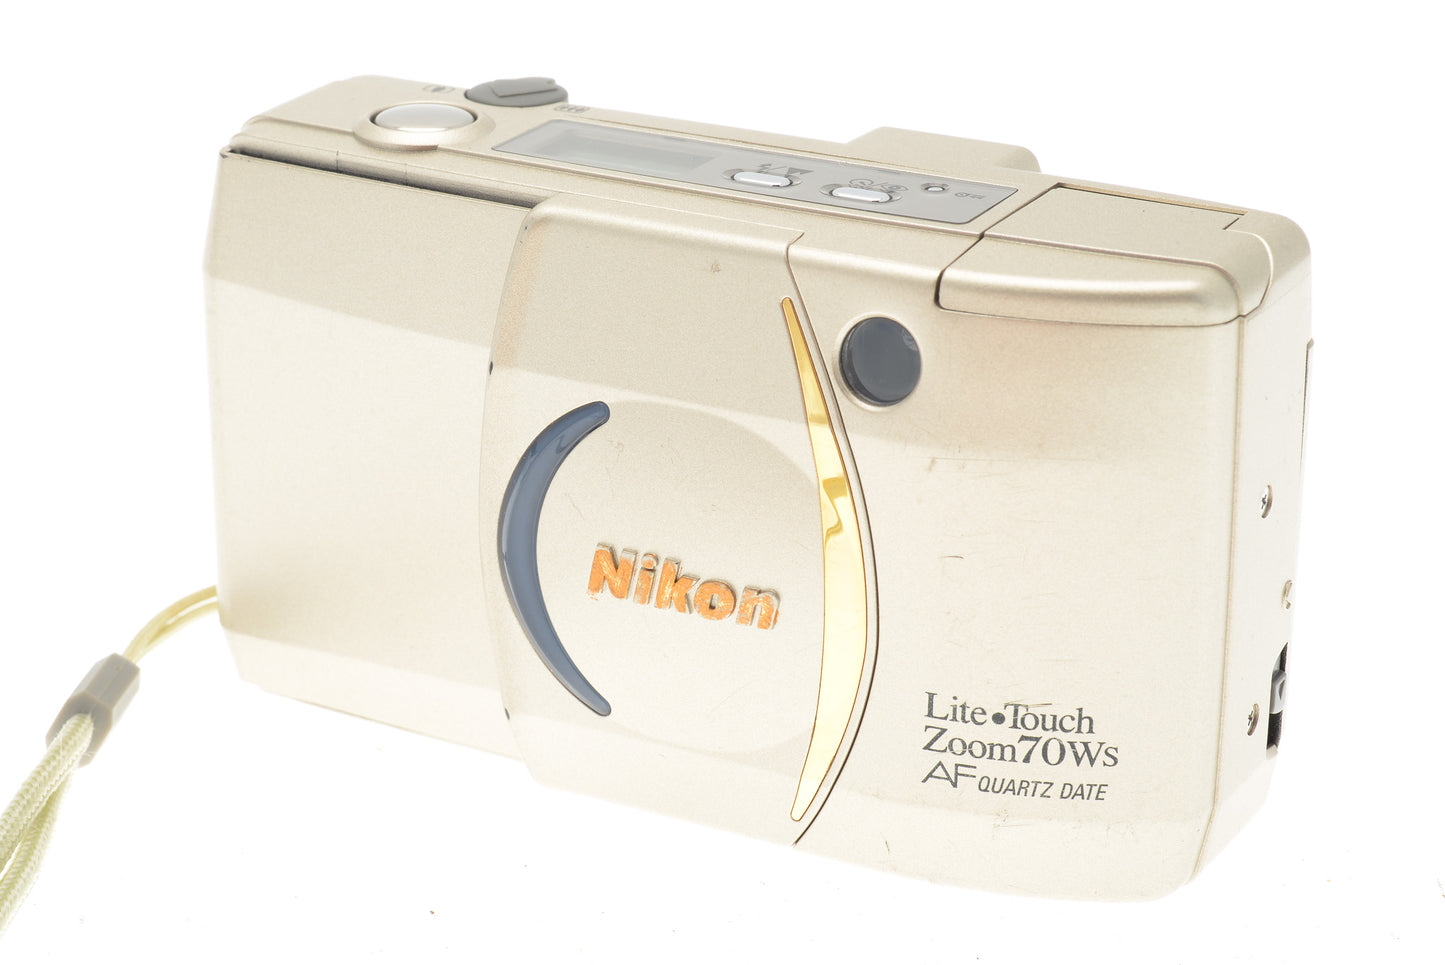 Nikon Lite Touch Zoom 70Ws - Camera